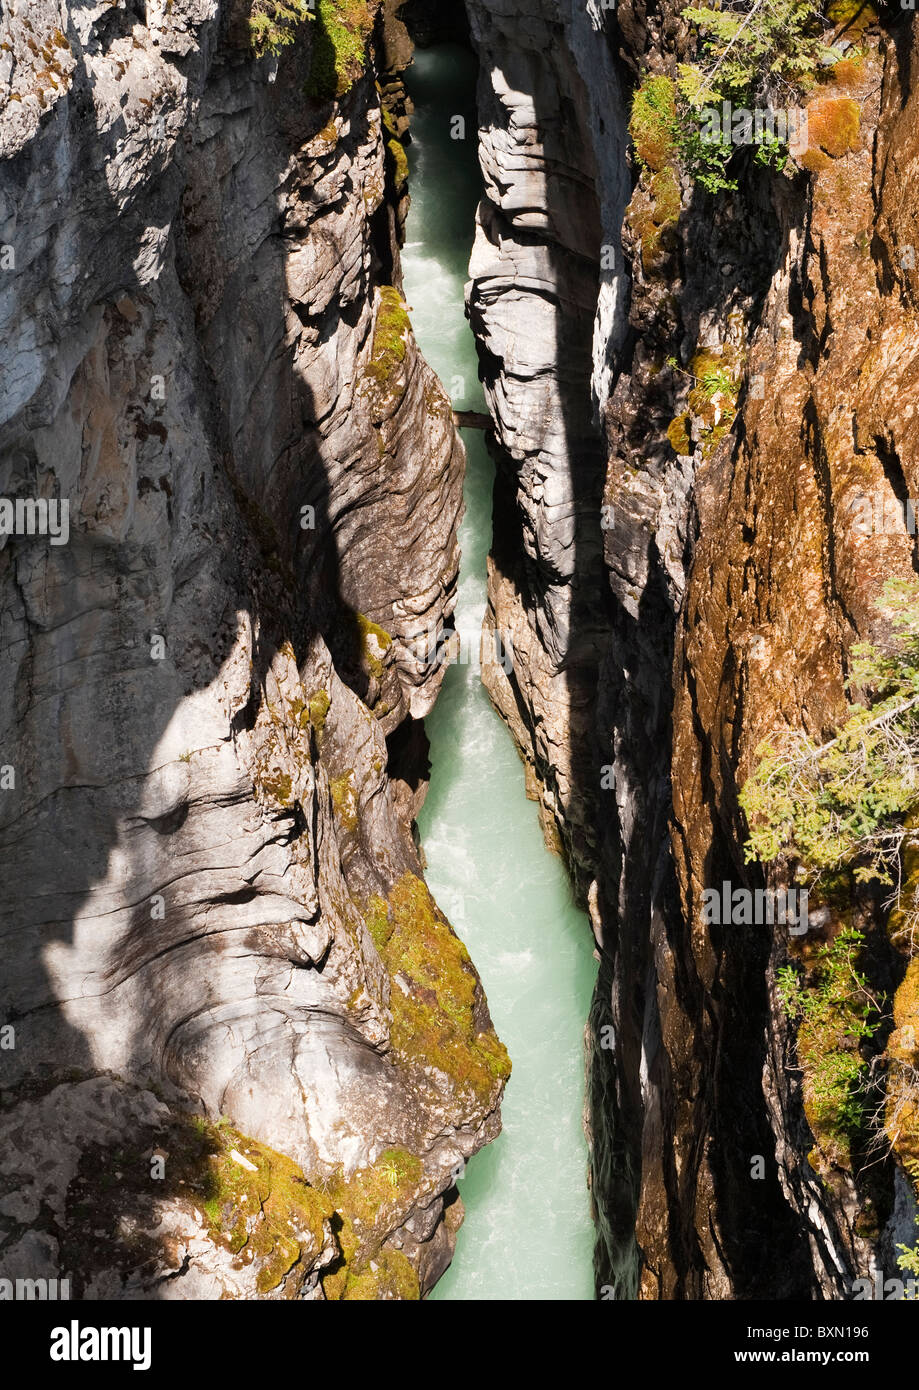 marble-canyon-kootenay-national-park-rocky-mountains-british-columbia-BXN196.jpg